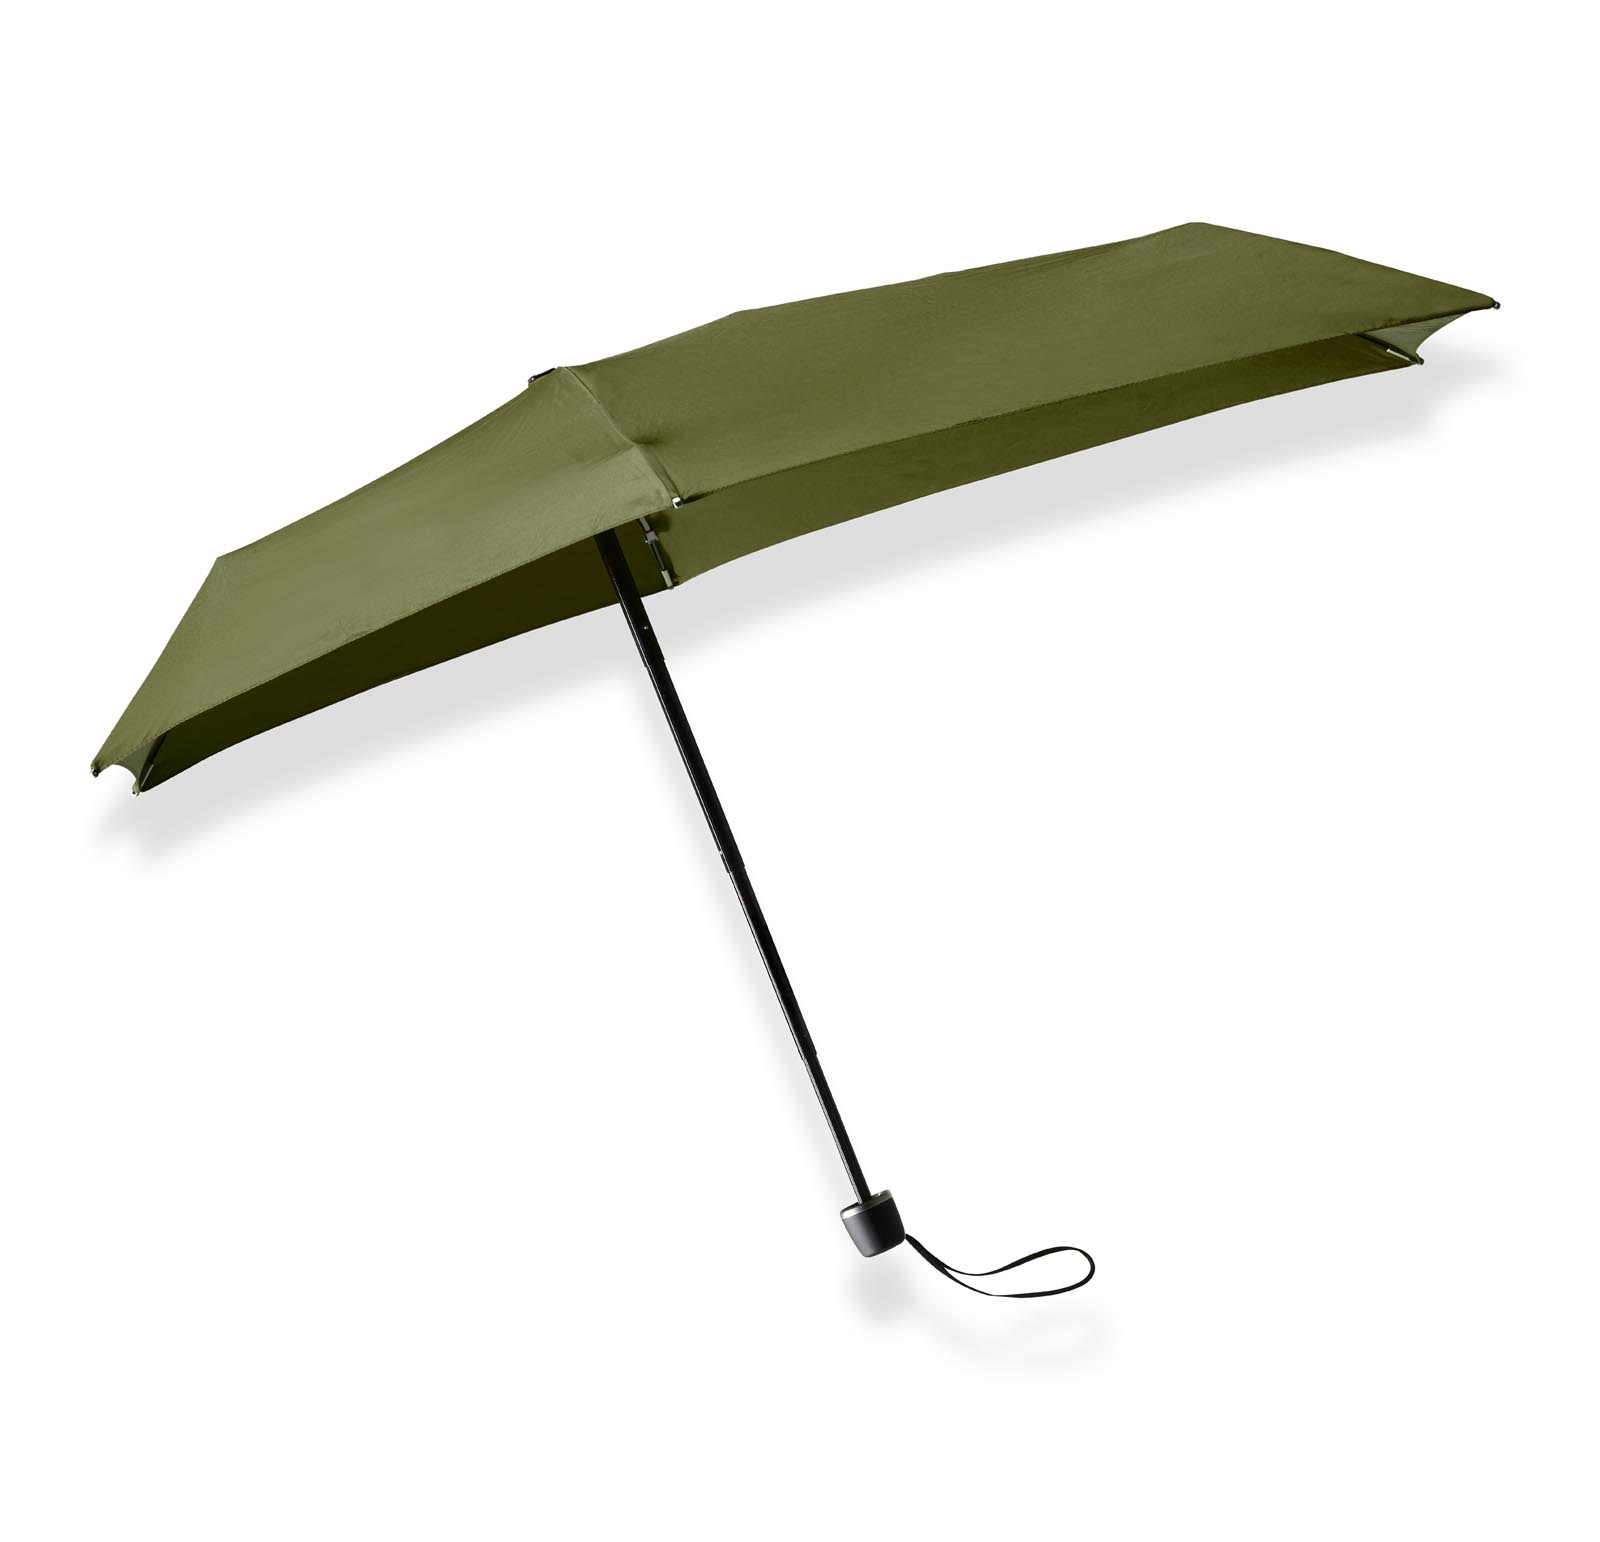 Cater uitbarsting knop Groene opvouwbare paraplu micro kopen? senz° micro cedar green